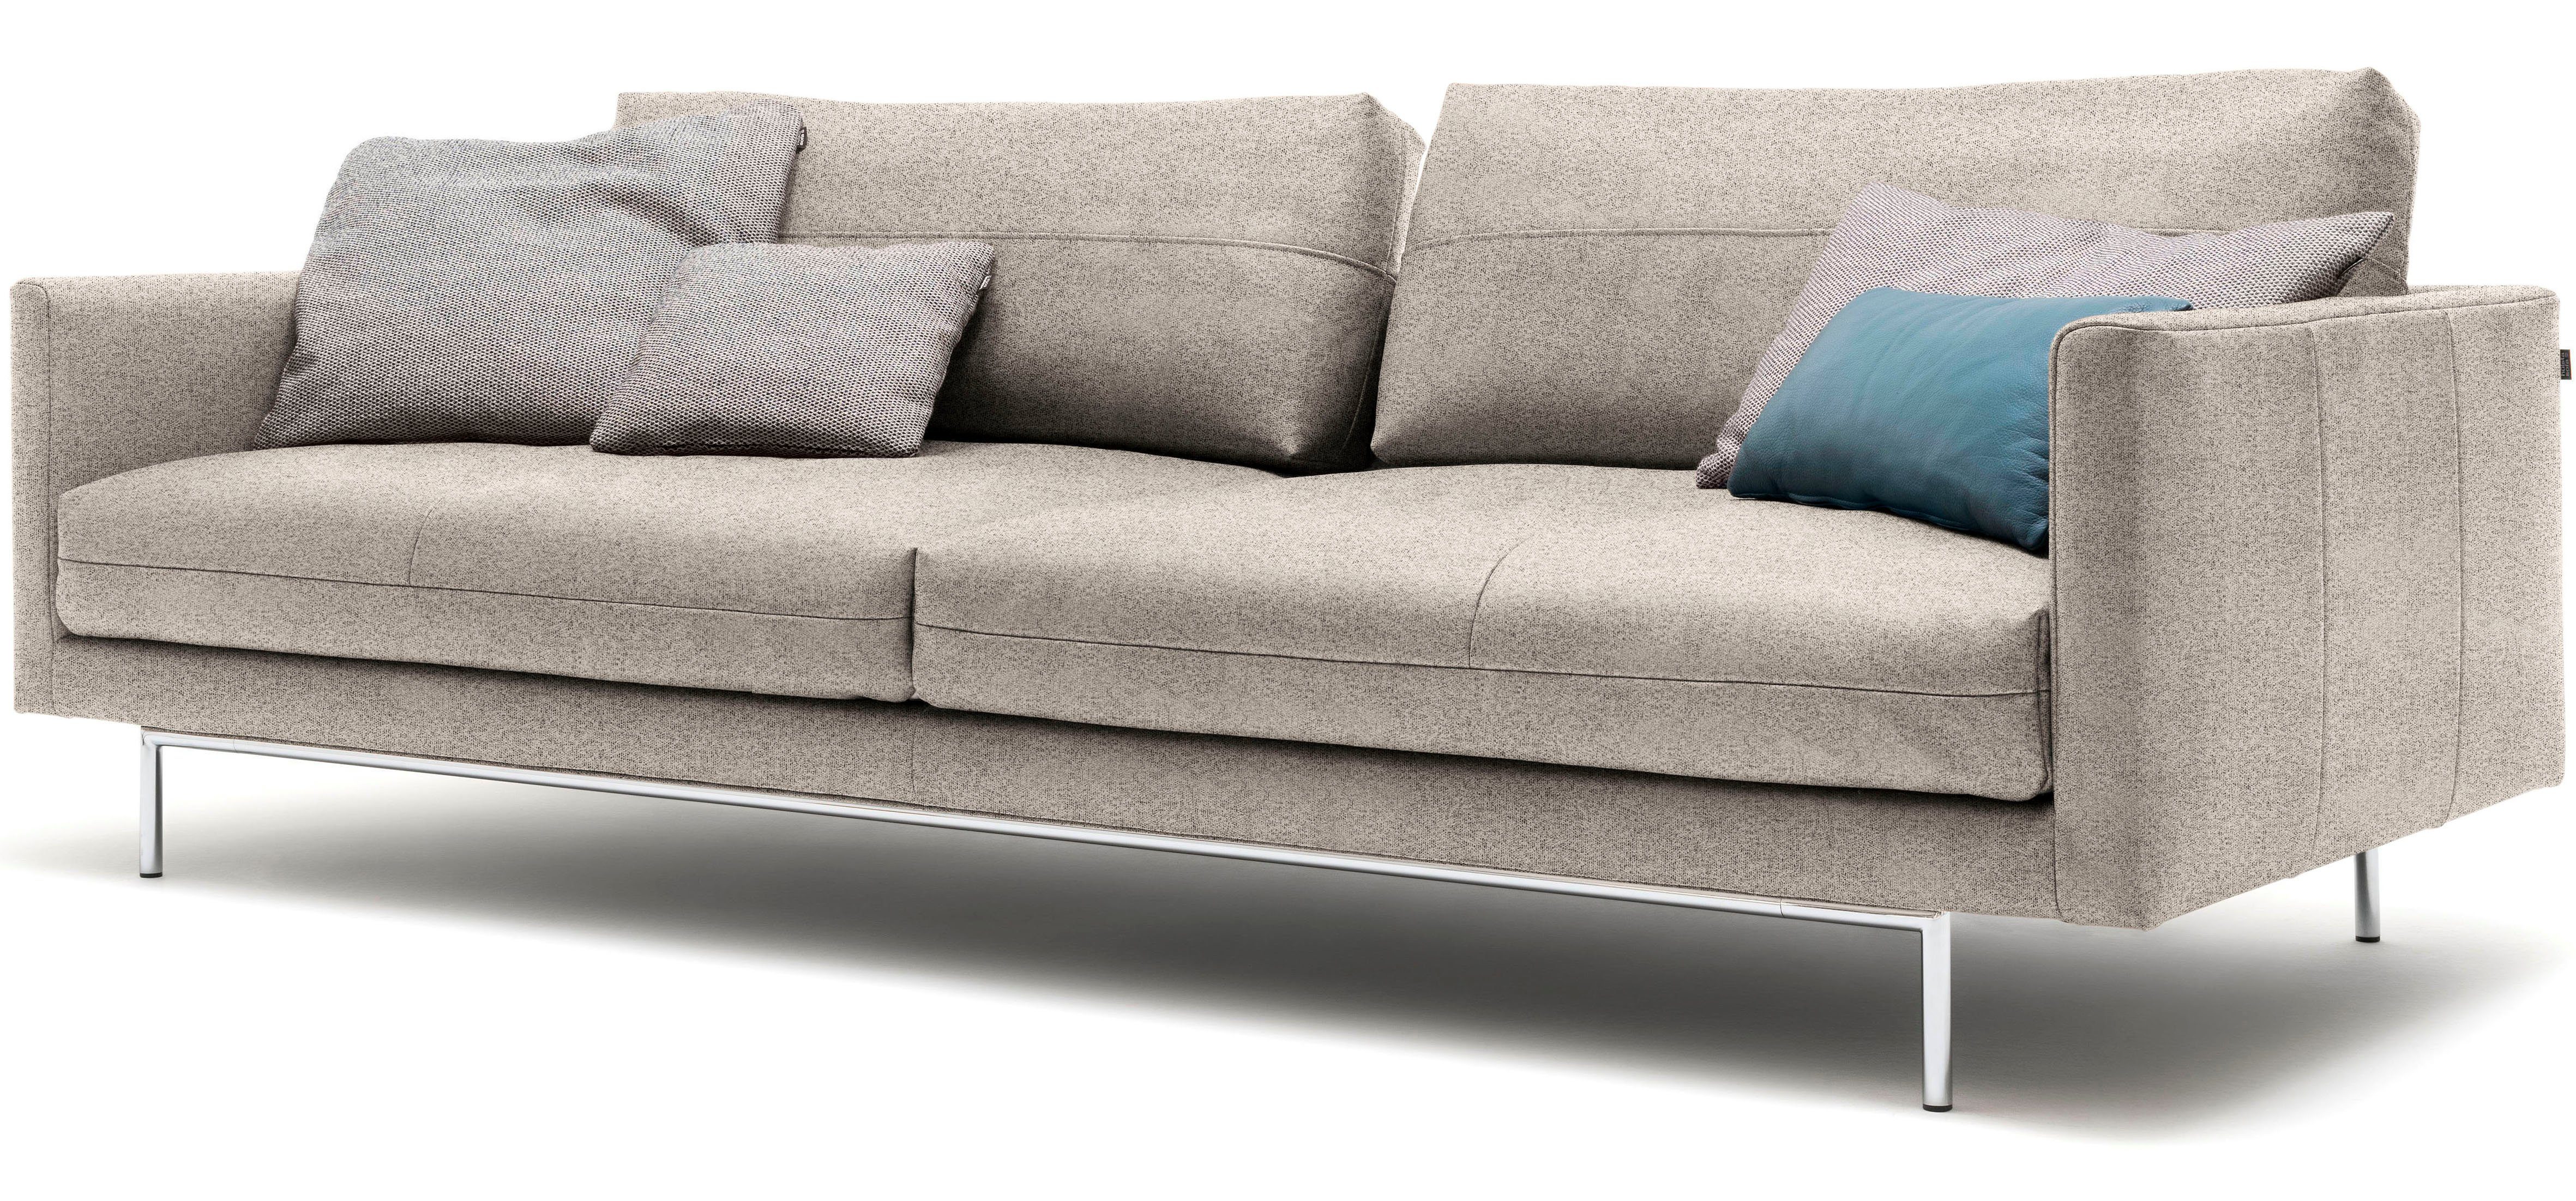 hülsta sofa 4-Sitzer grbeige-nat | /natur graubeige